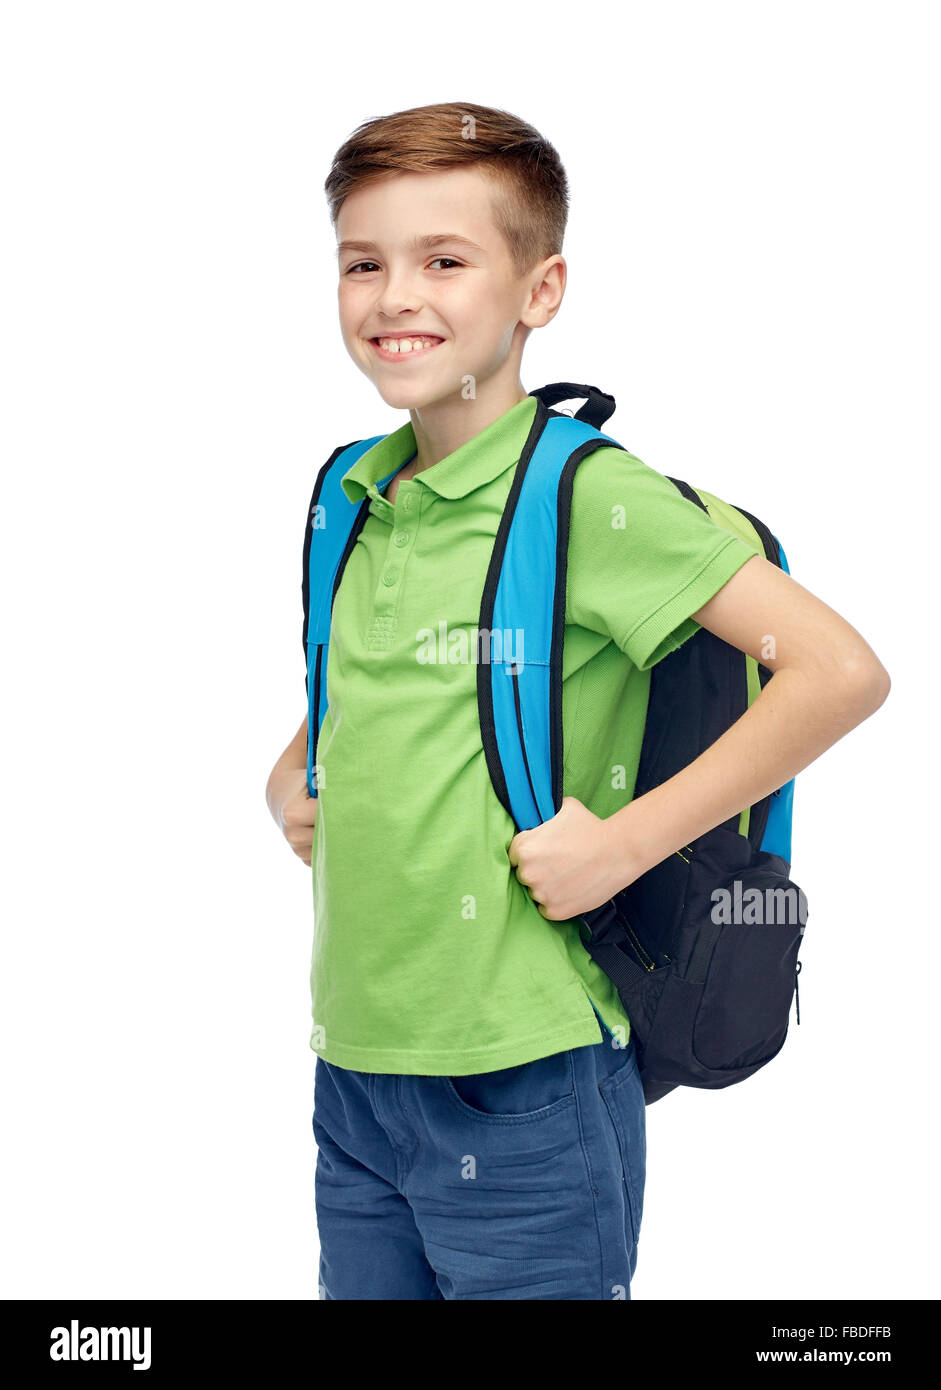 School Boy With Bag Sweden, SAVE 55% - modelcon.sk